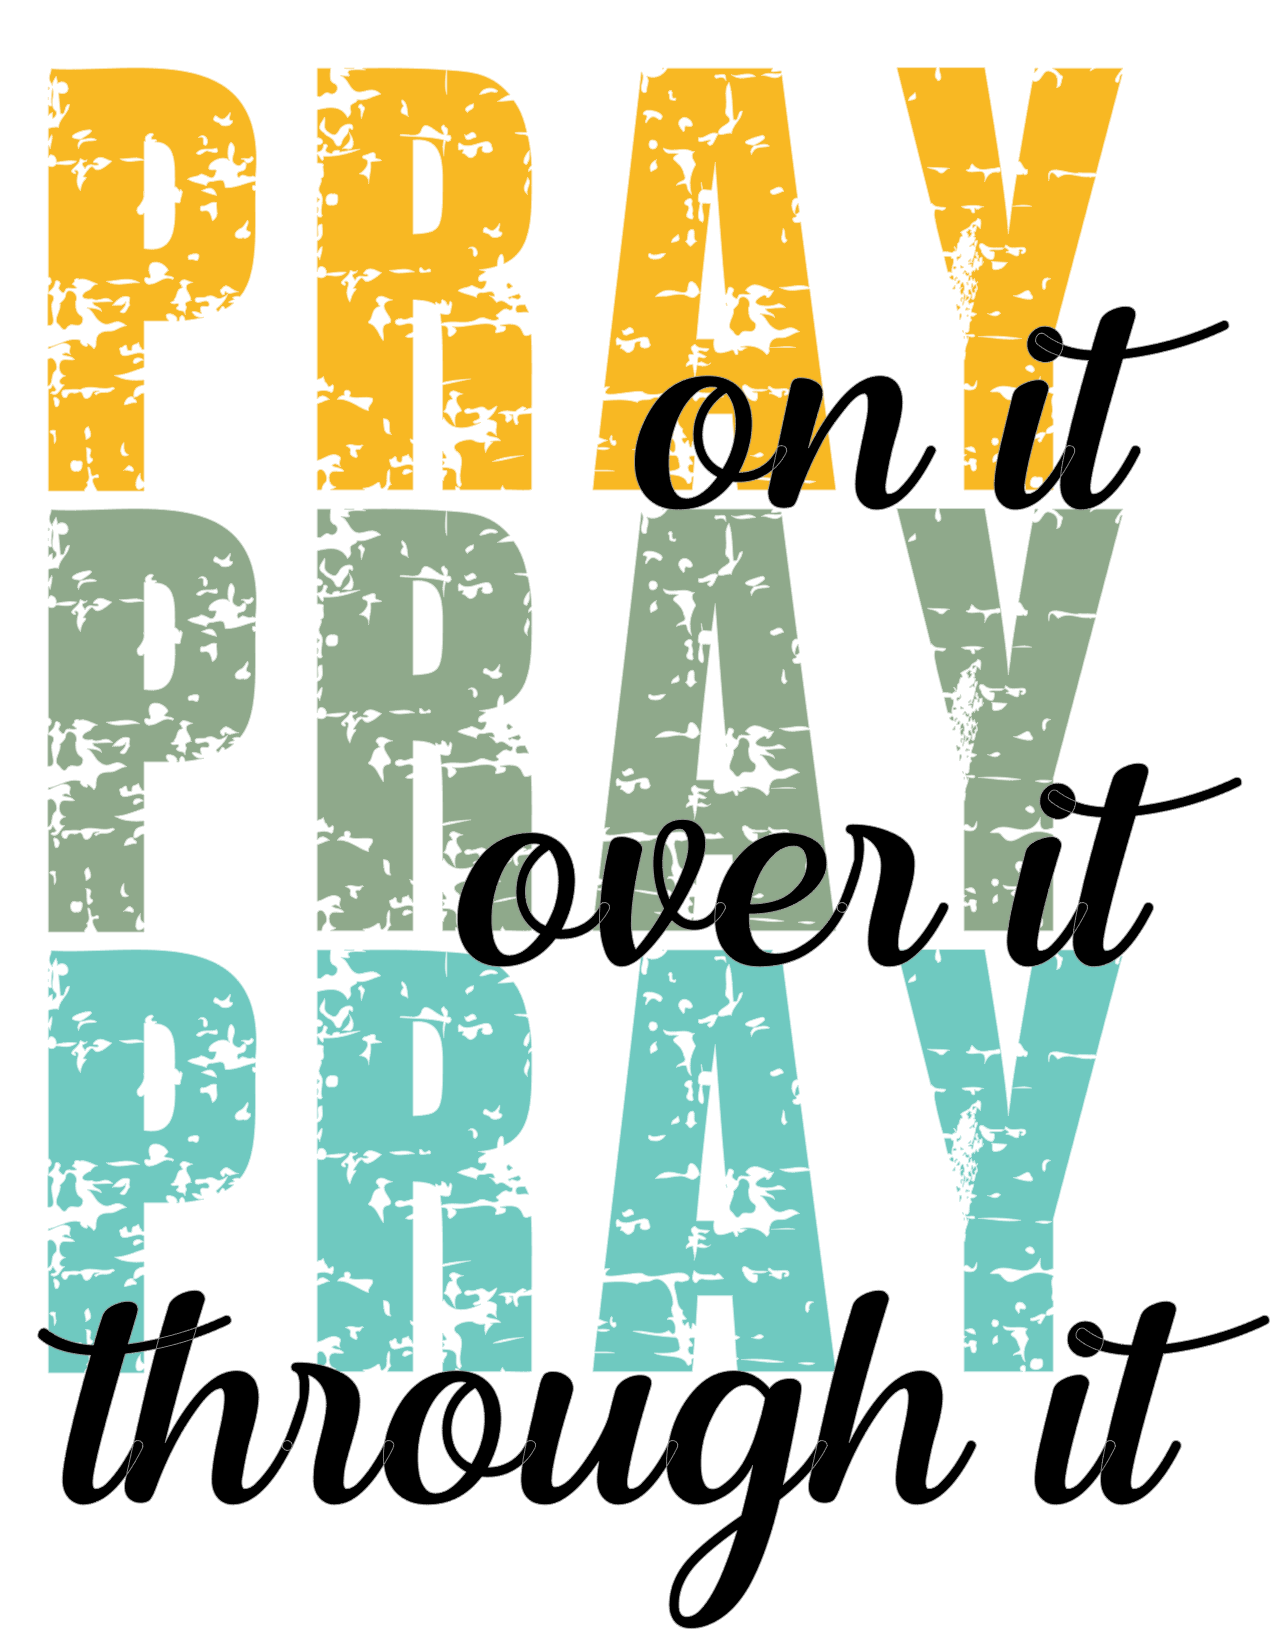 #144 PRAY On It Over It Through It